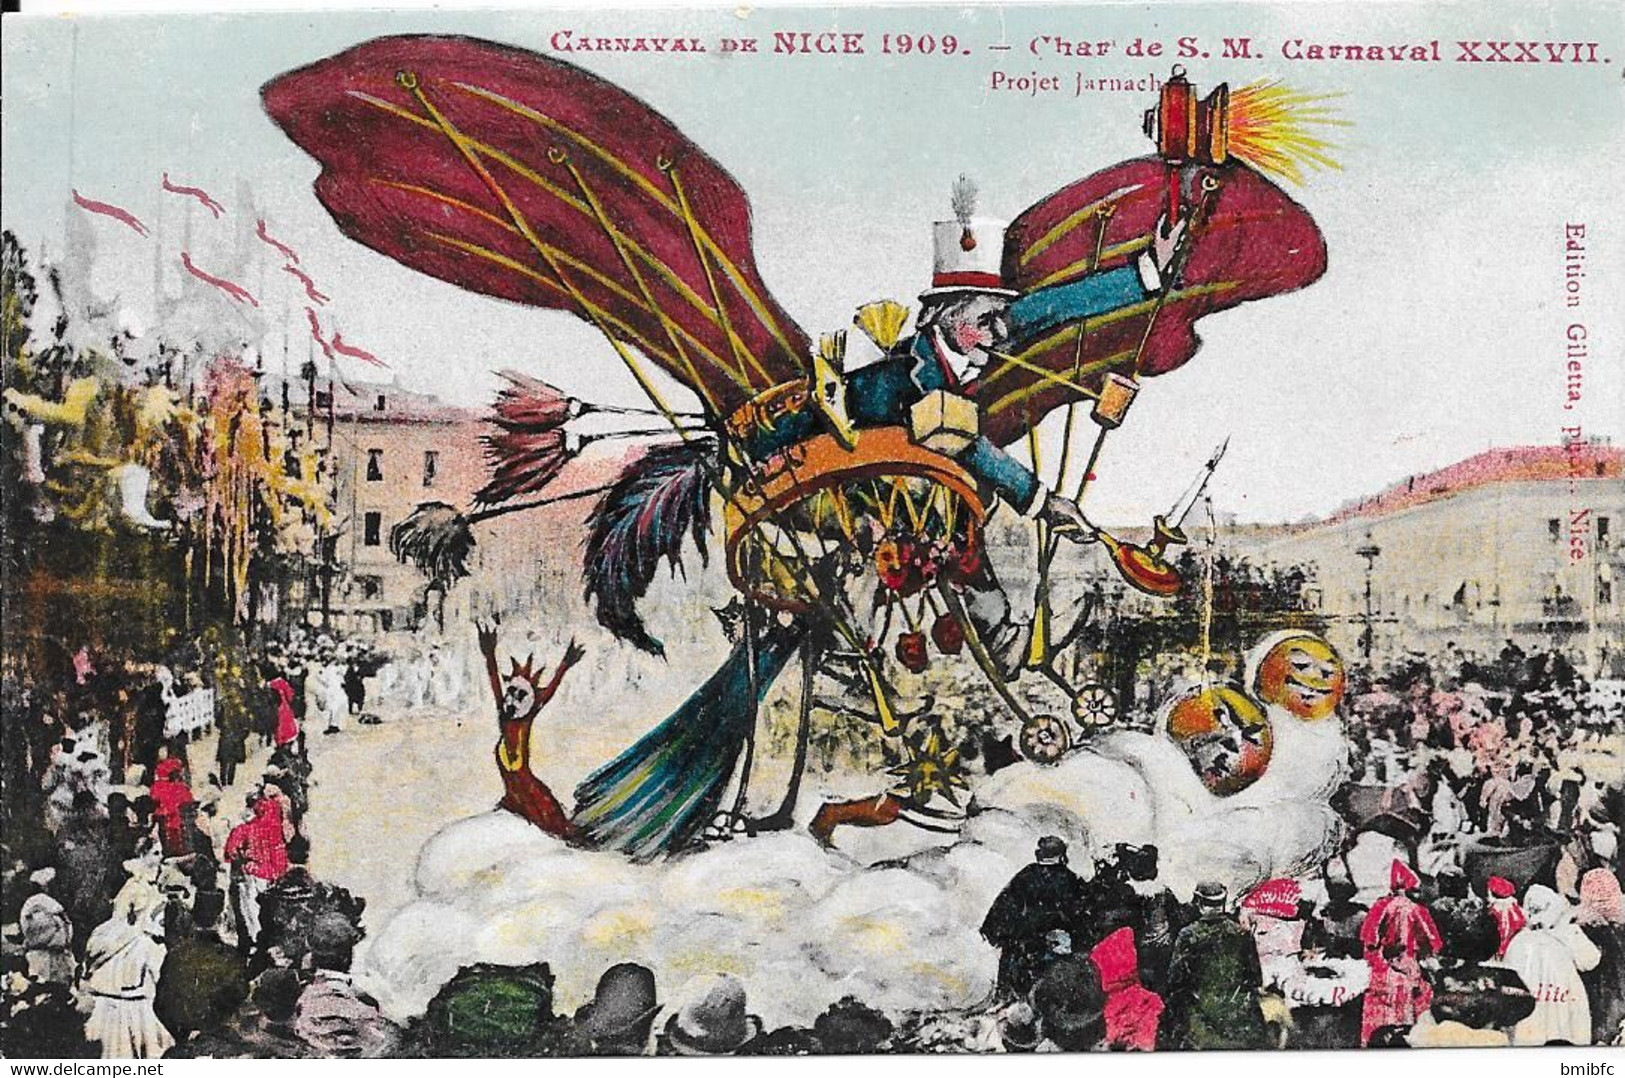 Carnaval De NICE 1909 - Char De S.M. Carnaval XXXVII  - Edition Giletta Nice - Carnaval